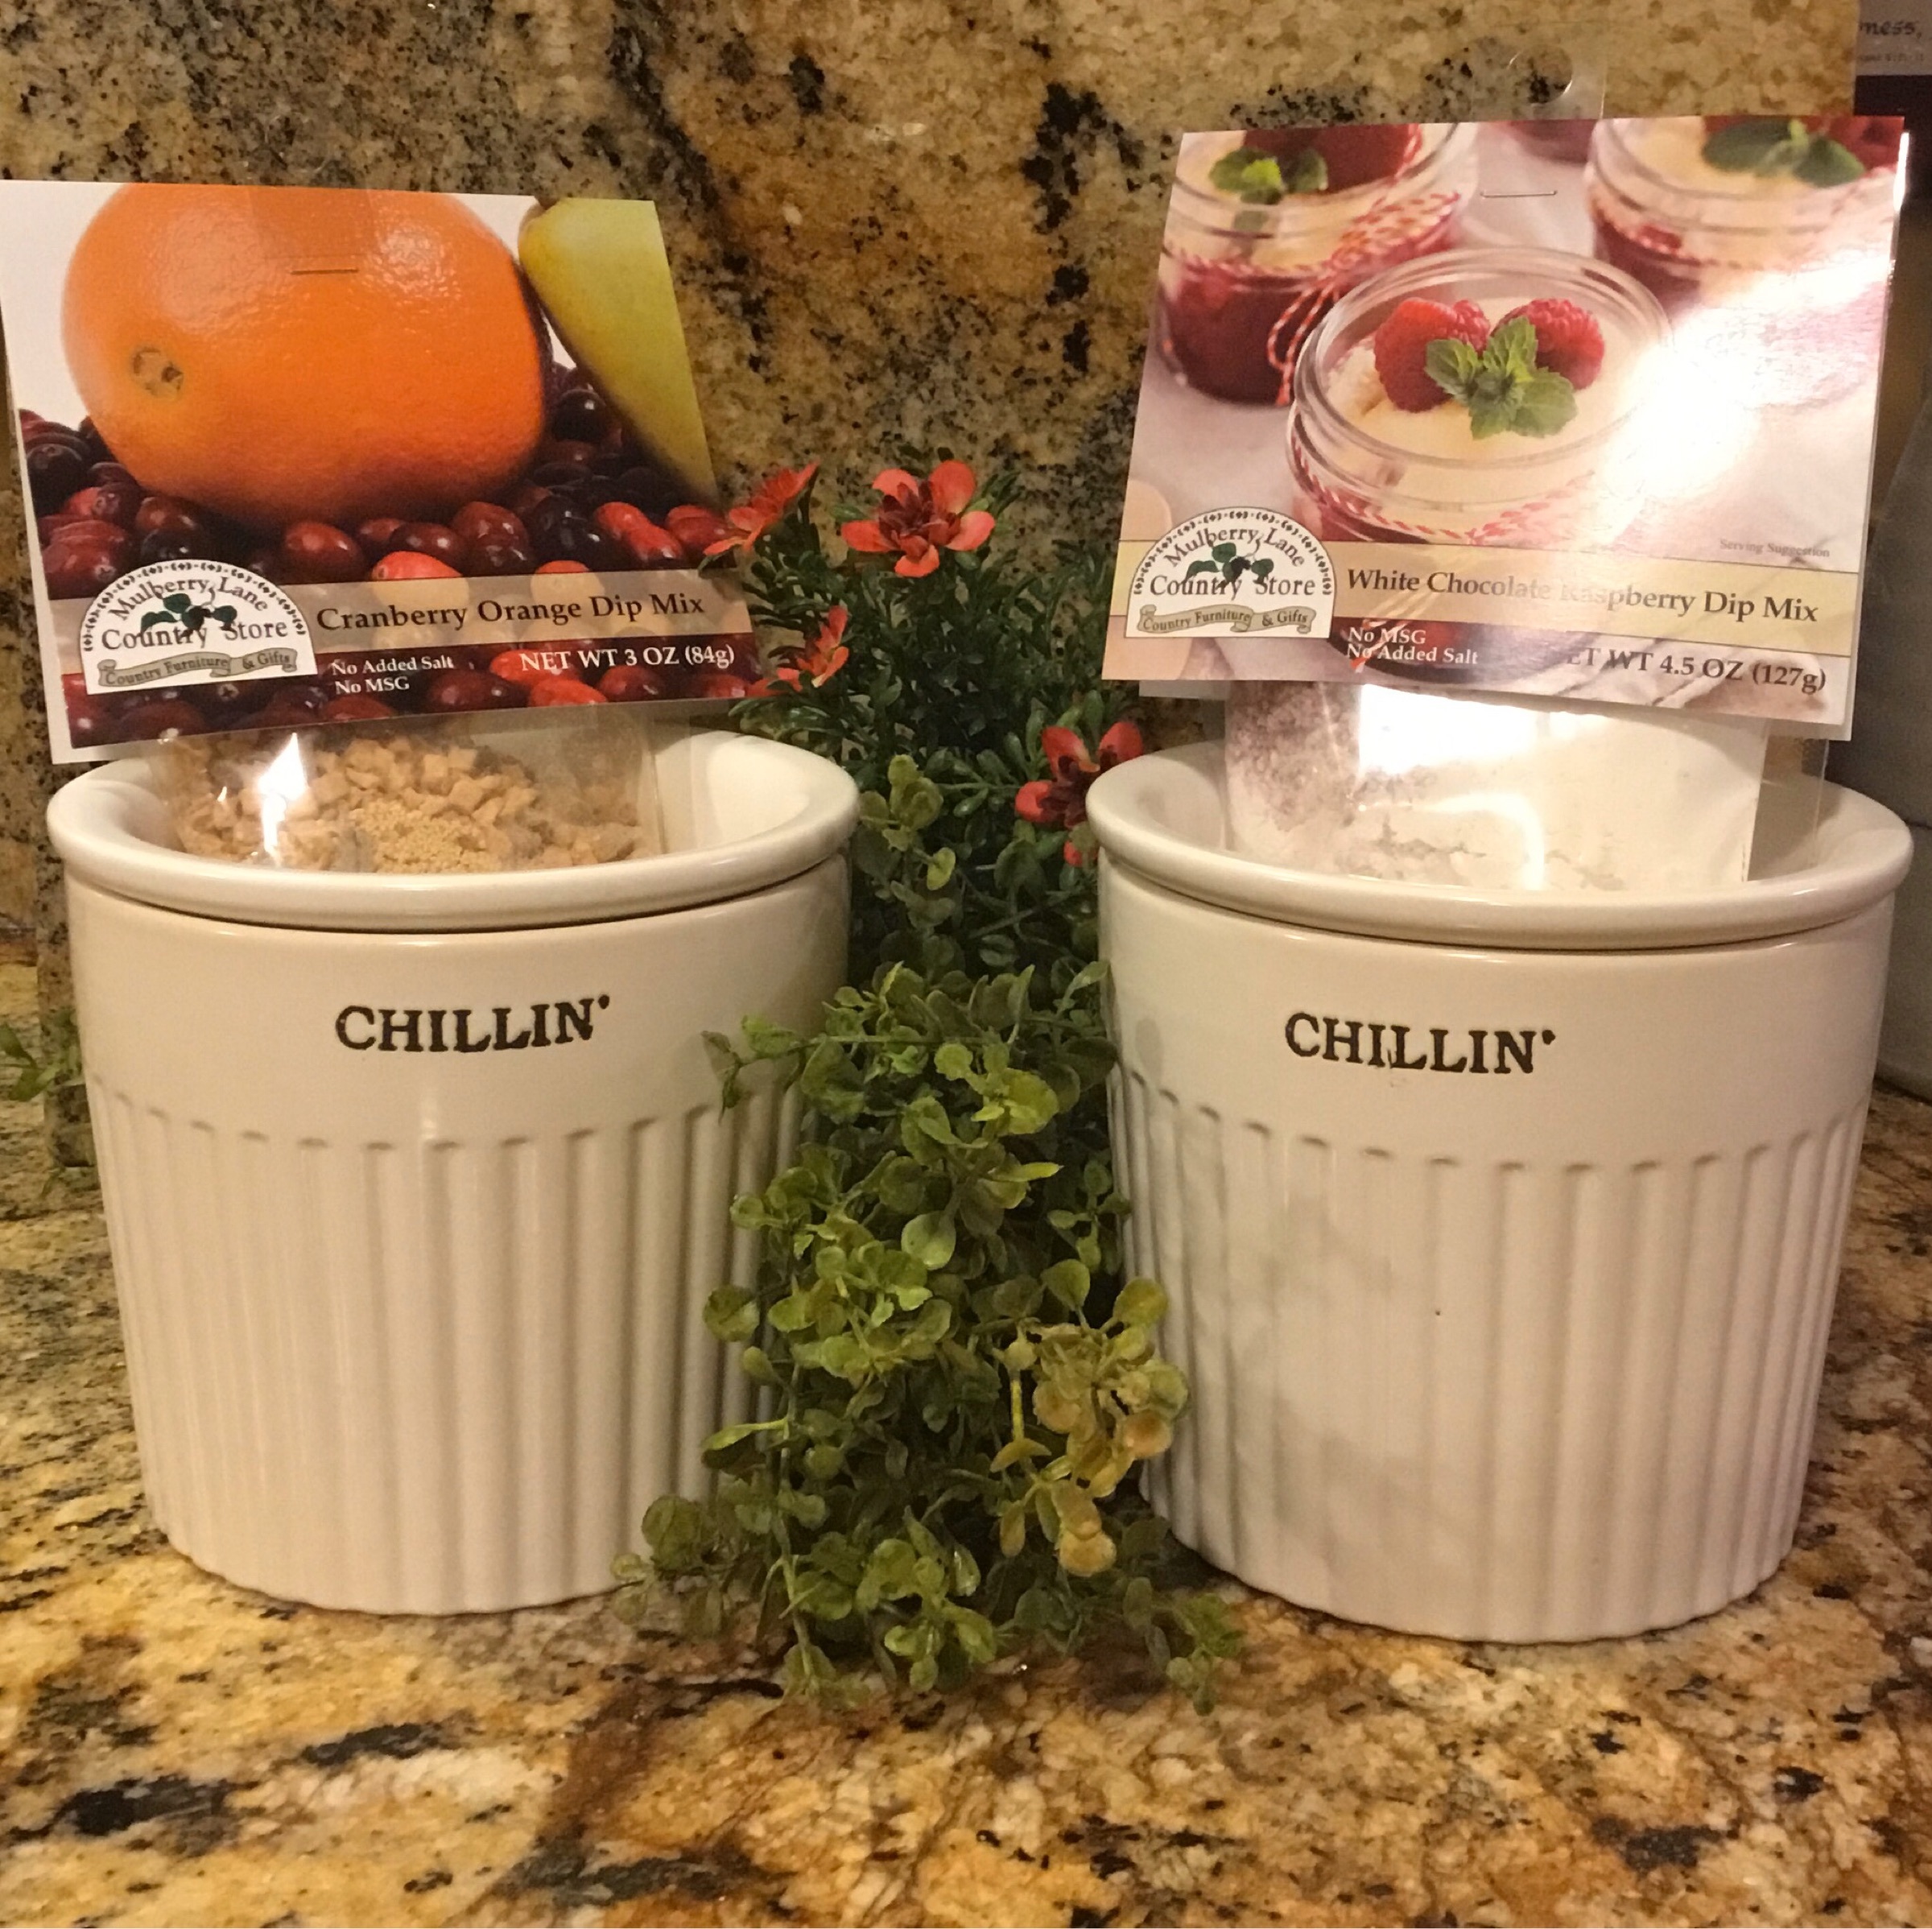 Chillin’ Two piece Dip Crock